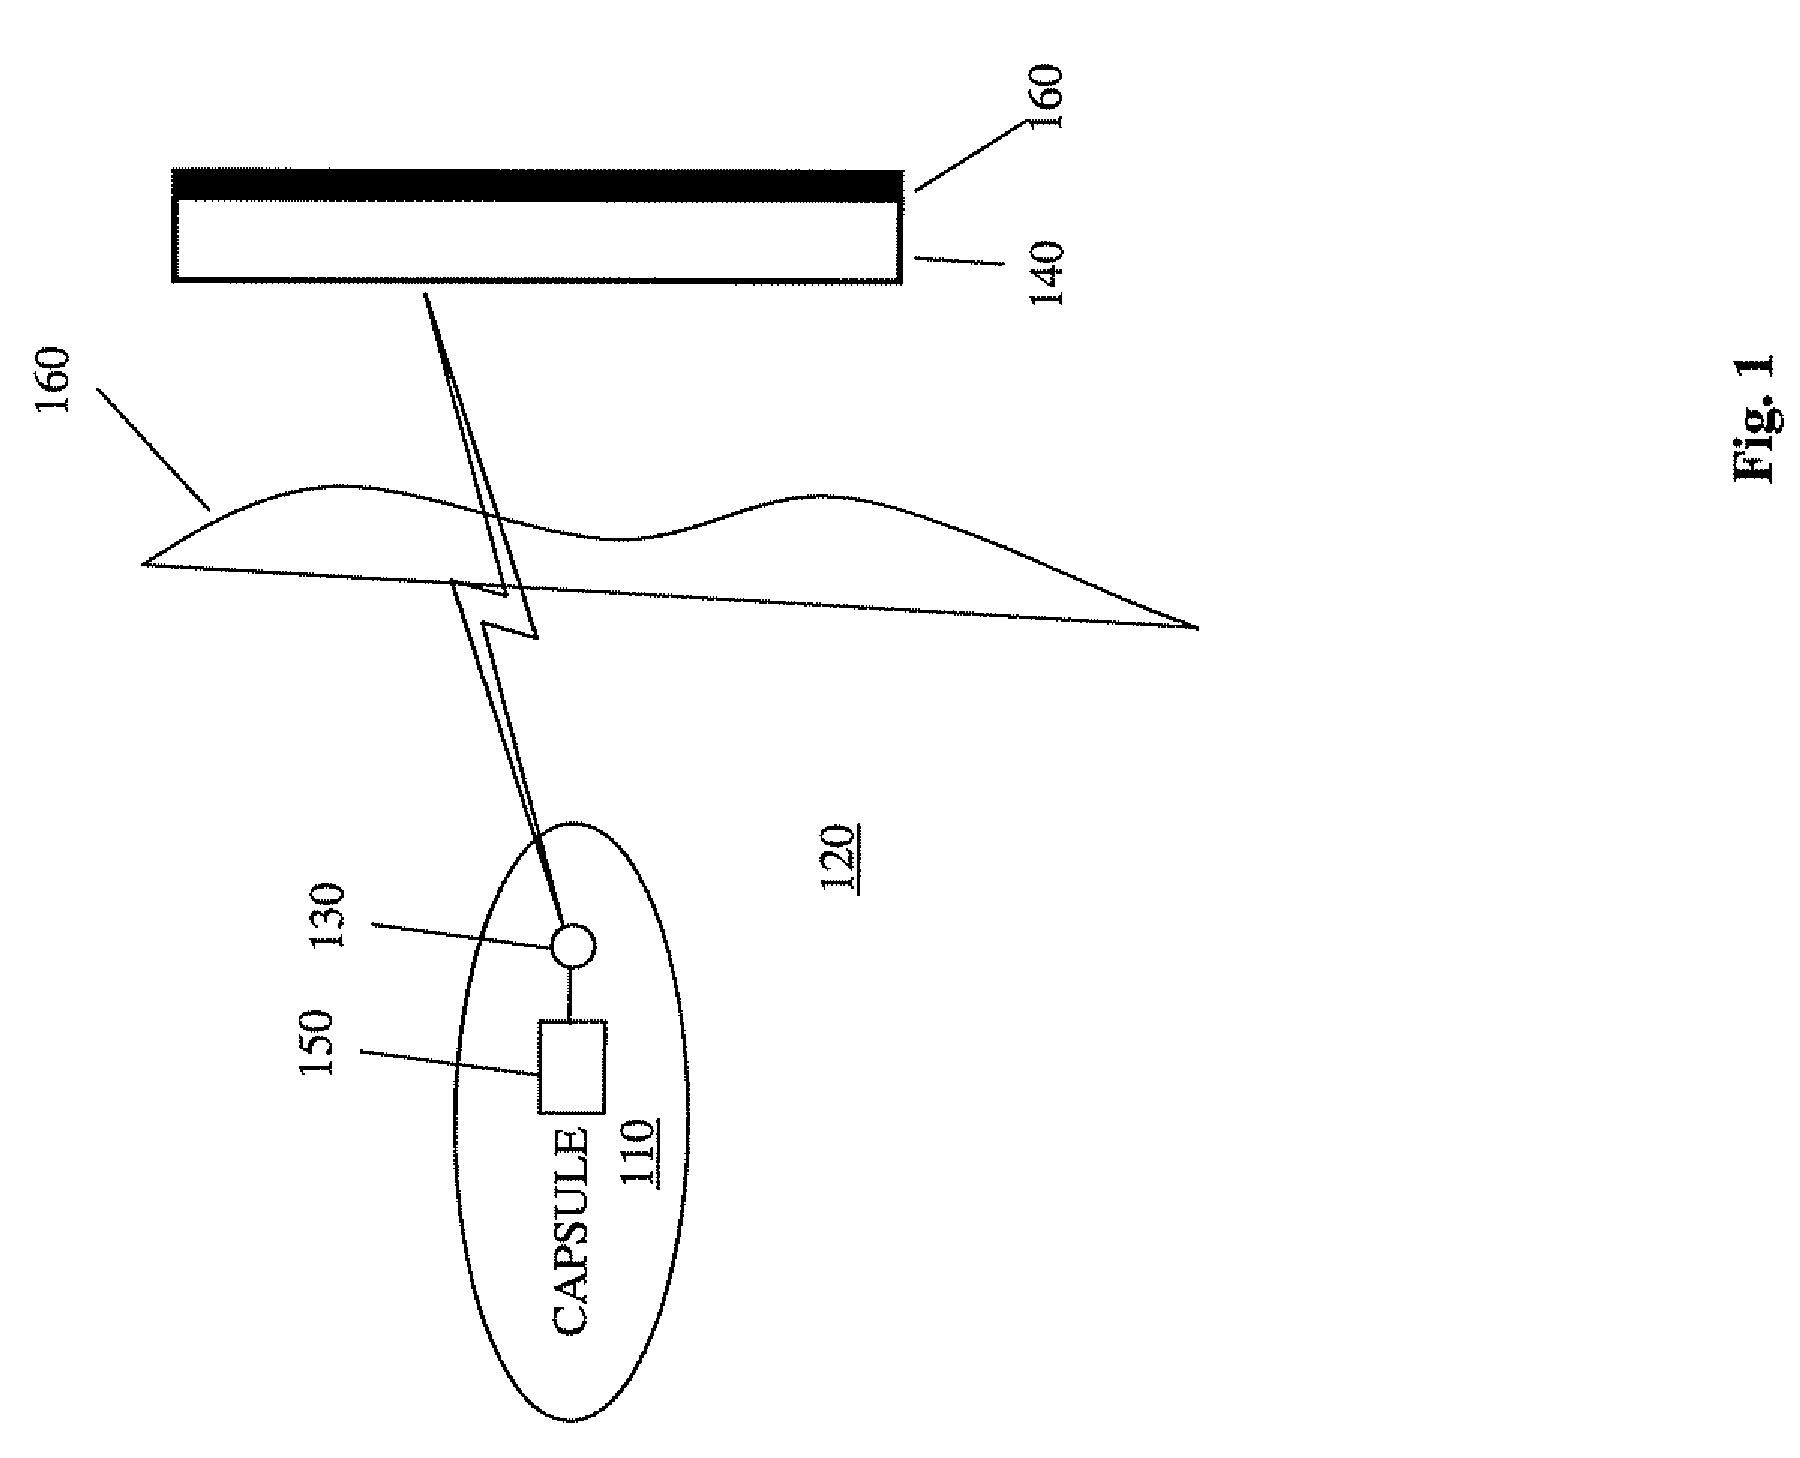 Dual polarized dipole wearable antenna